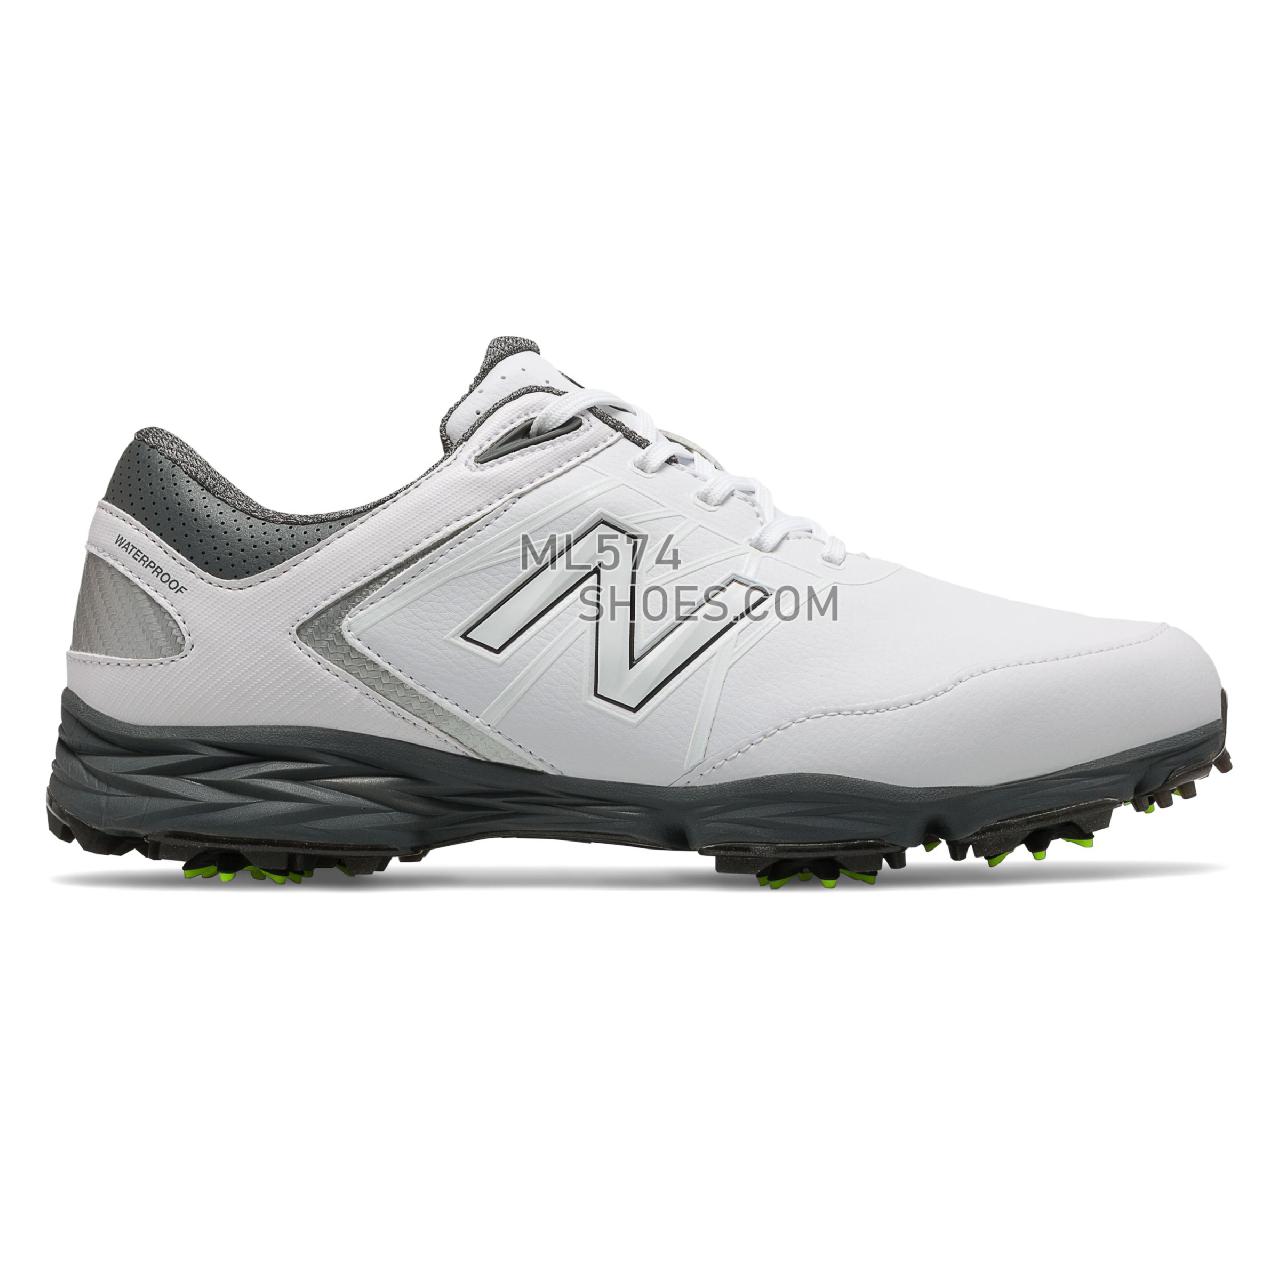 New Balance Striker - Men's Golf - White with Grey - NBG2005WG